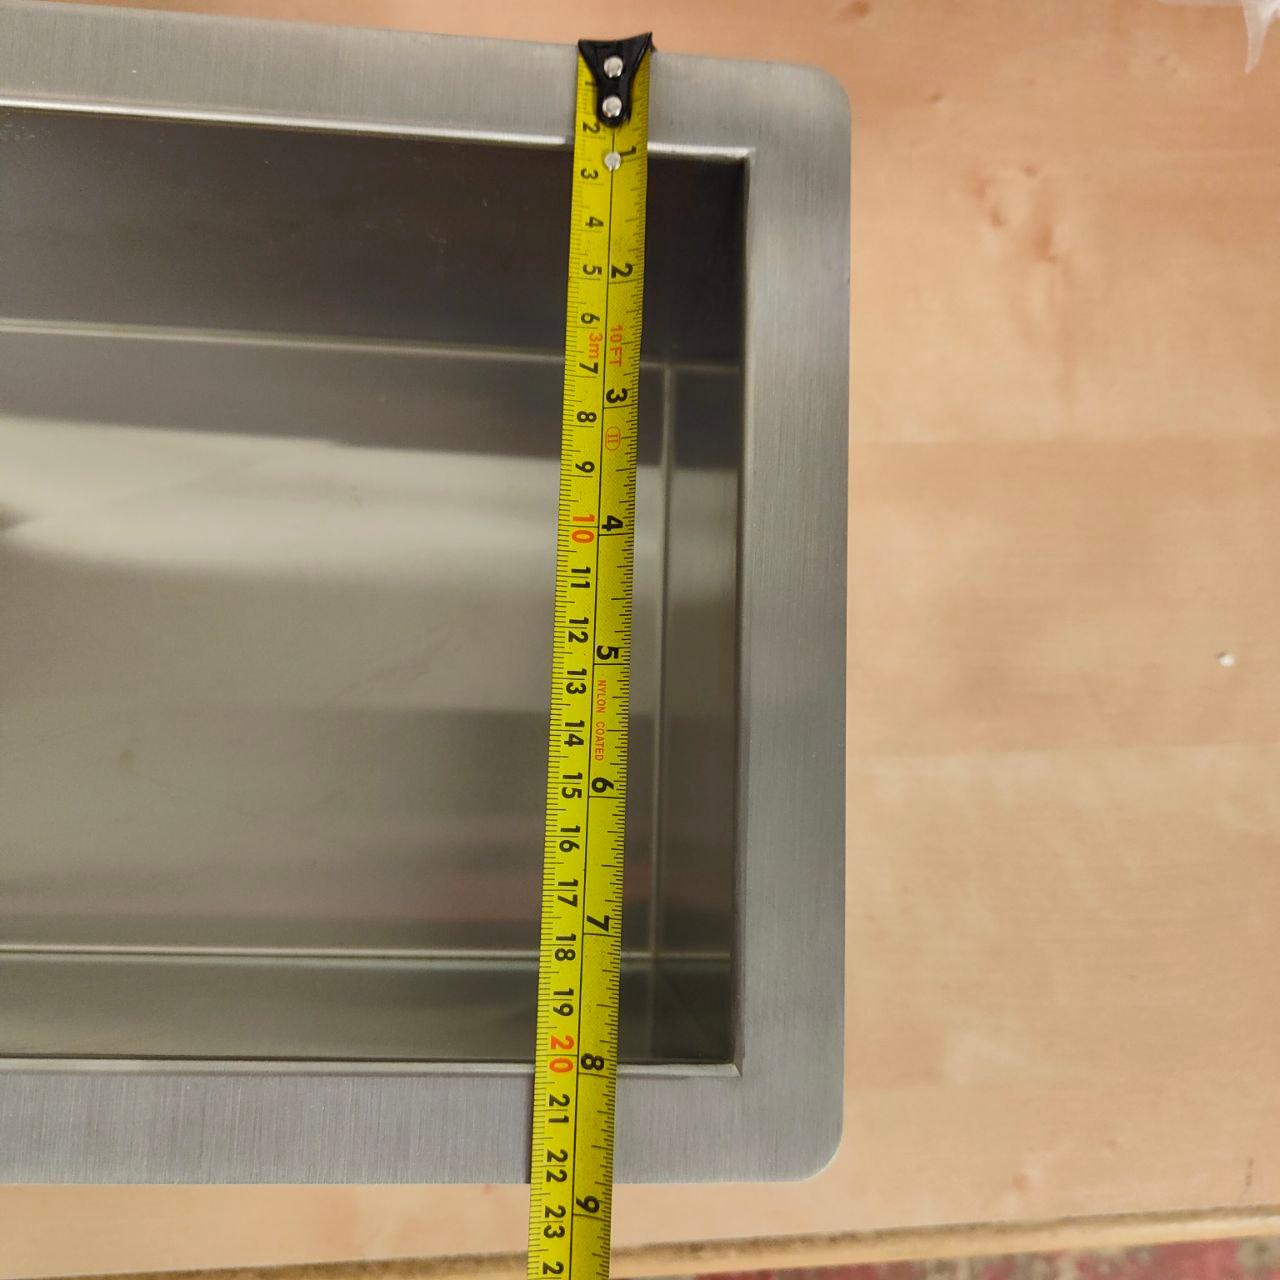 Mizzo Linea Small Kitchen Sink 18x40cm Stainless Steel Satin Finish - Massive Discounts